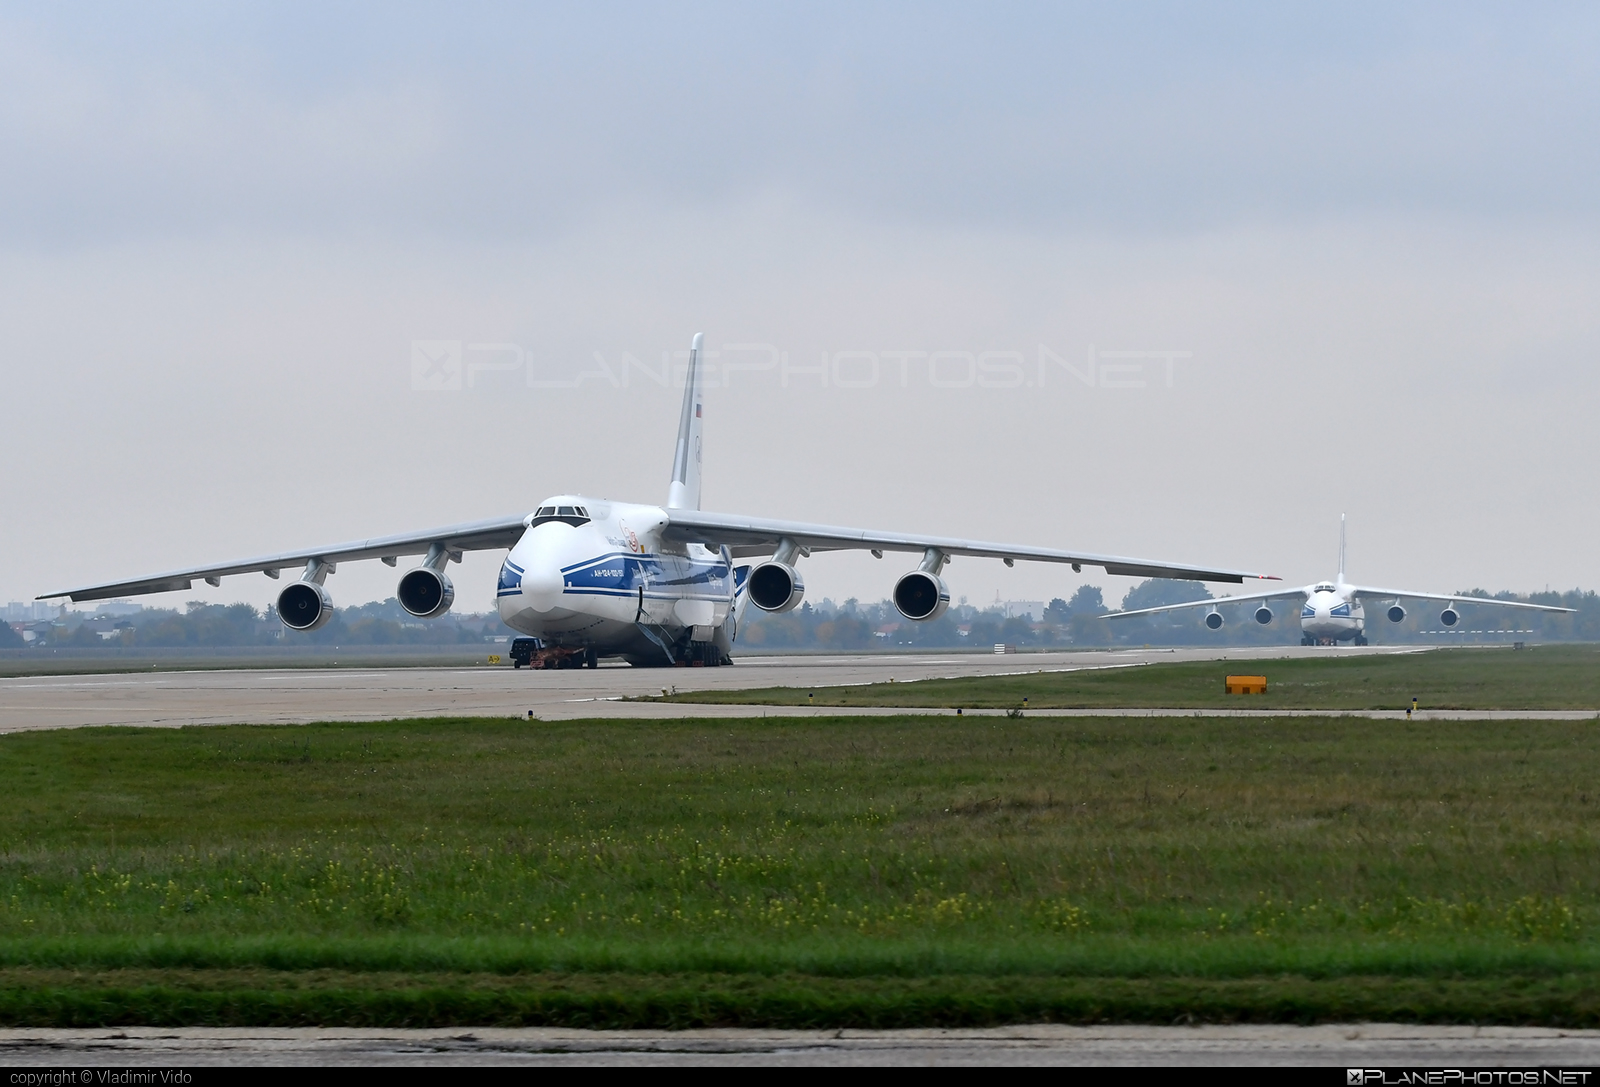 Antonov An-124-100-150 Ruslan - RA-82081 operated by Volga Dnepr Airlines #VolgaDneprAirlines #an124 #an124100 #an124100150 #an124ruslan #antonov #antonov124 #antonovan124 #ruslan